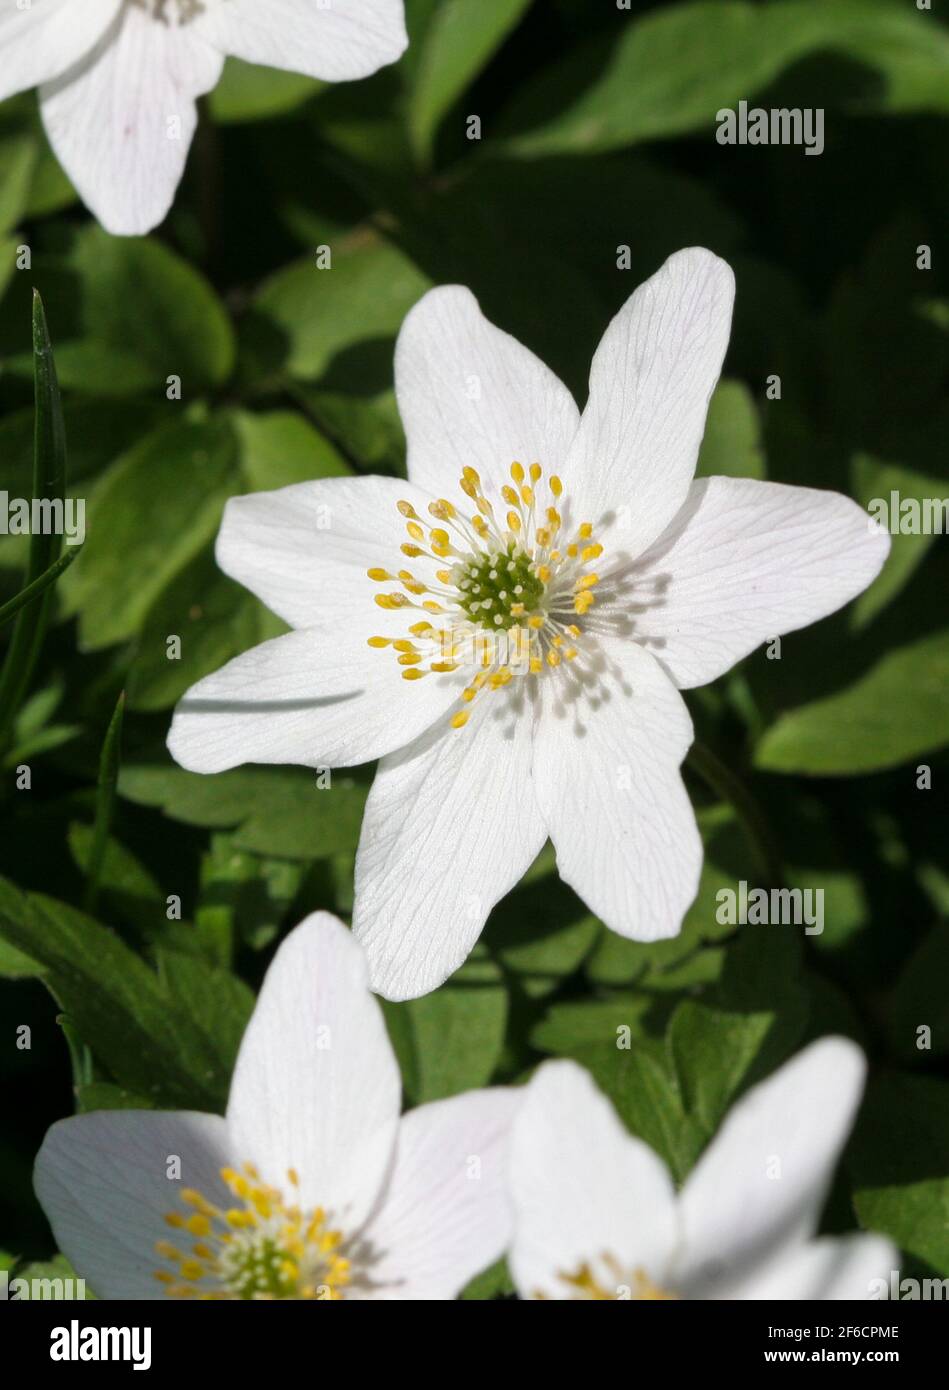 WHITE ANEMONES Anemone Nemorosa in spring Stock Photo